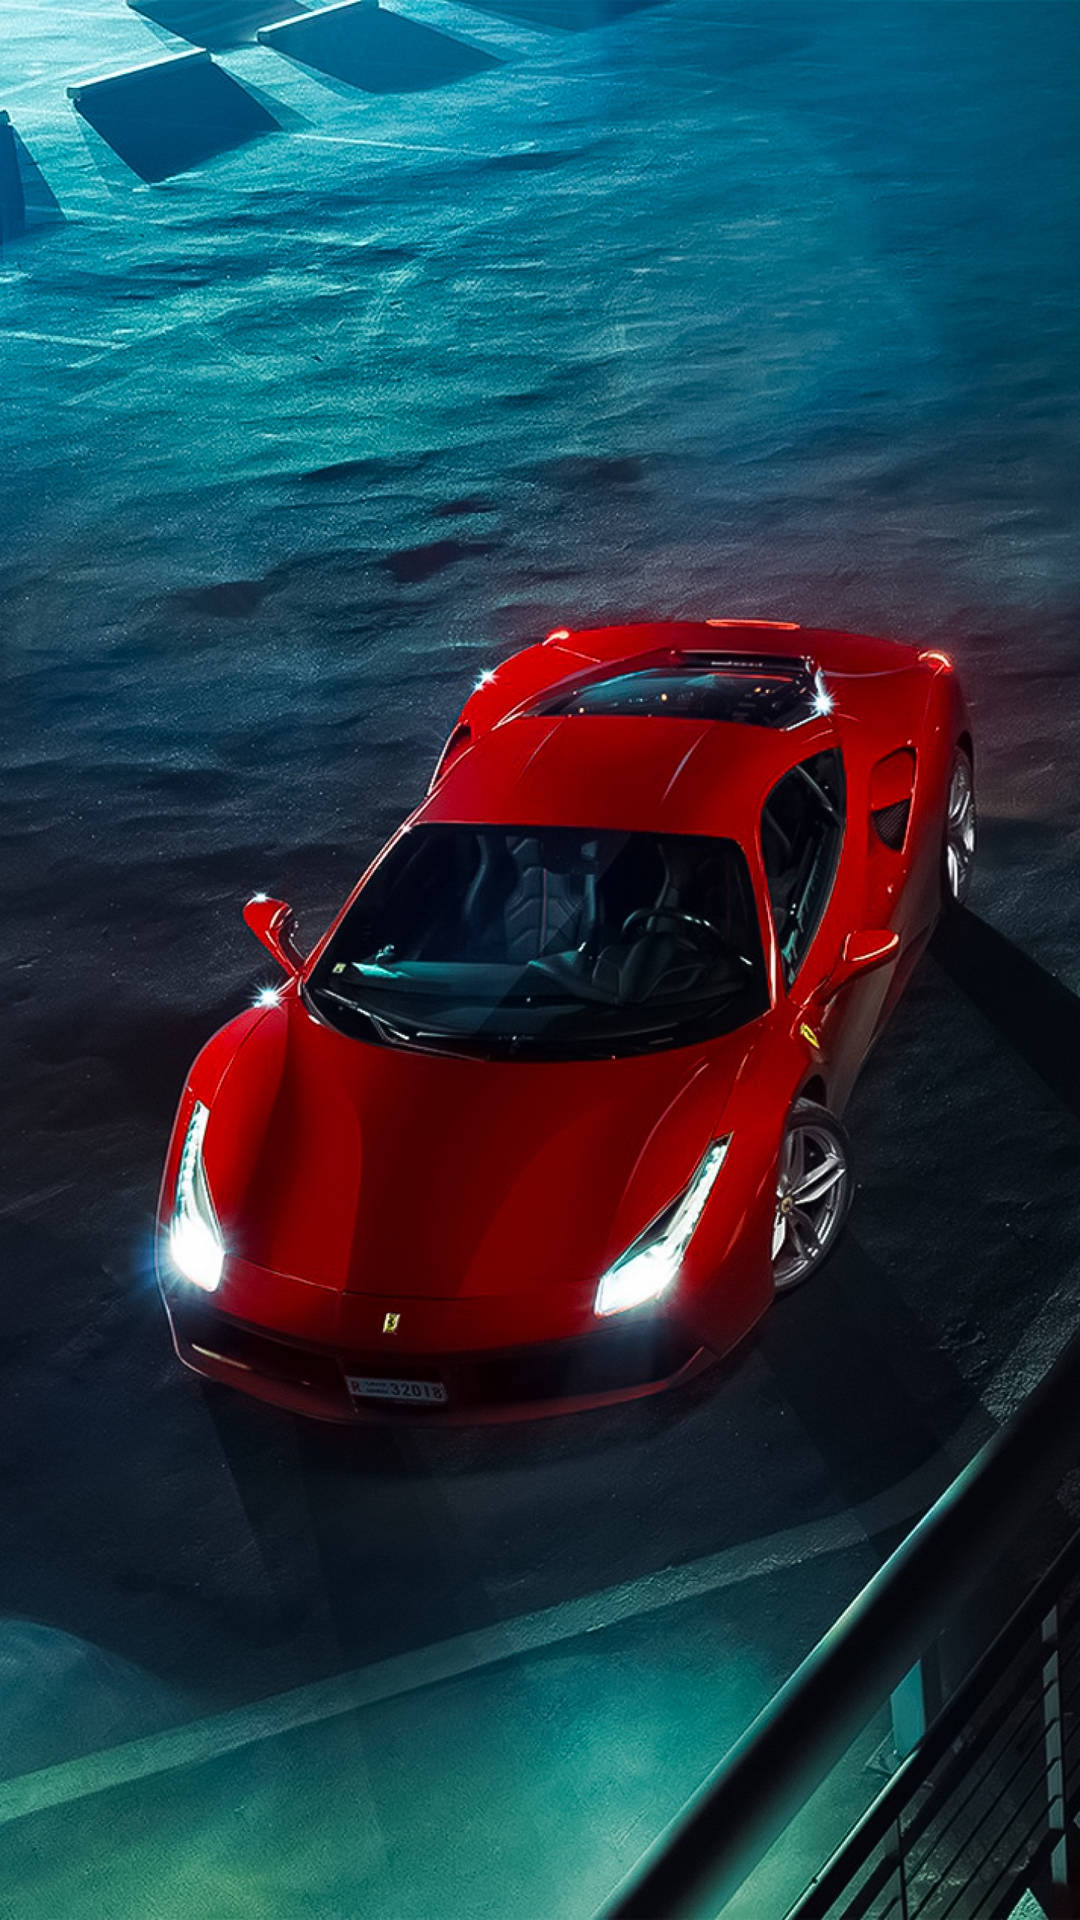 Caption: Luxury in Hand - The Ferrari Phone Wallpaper